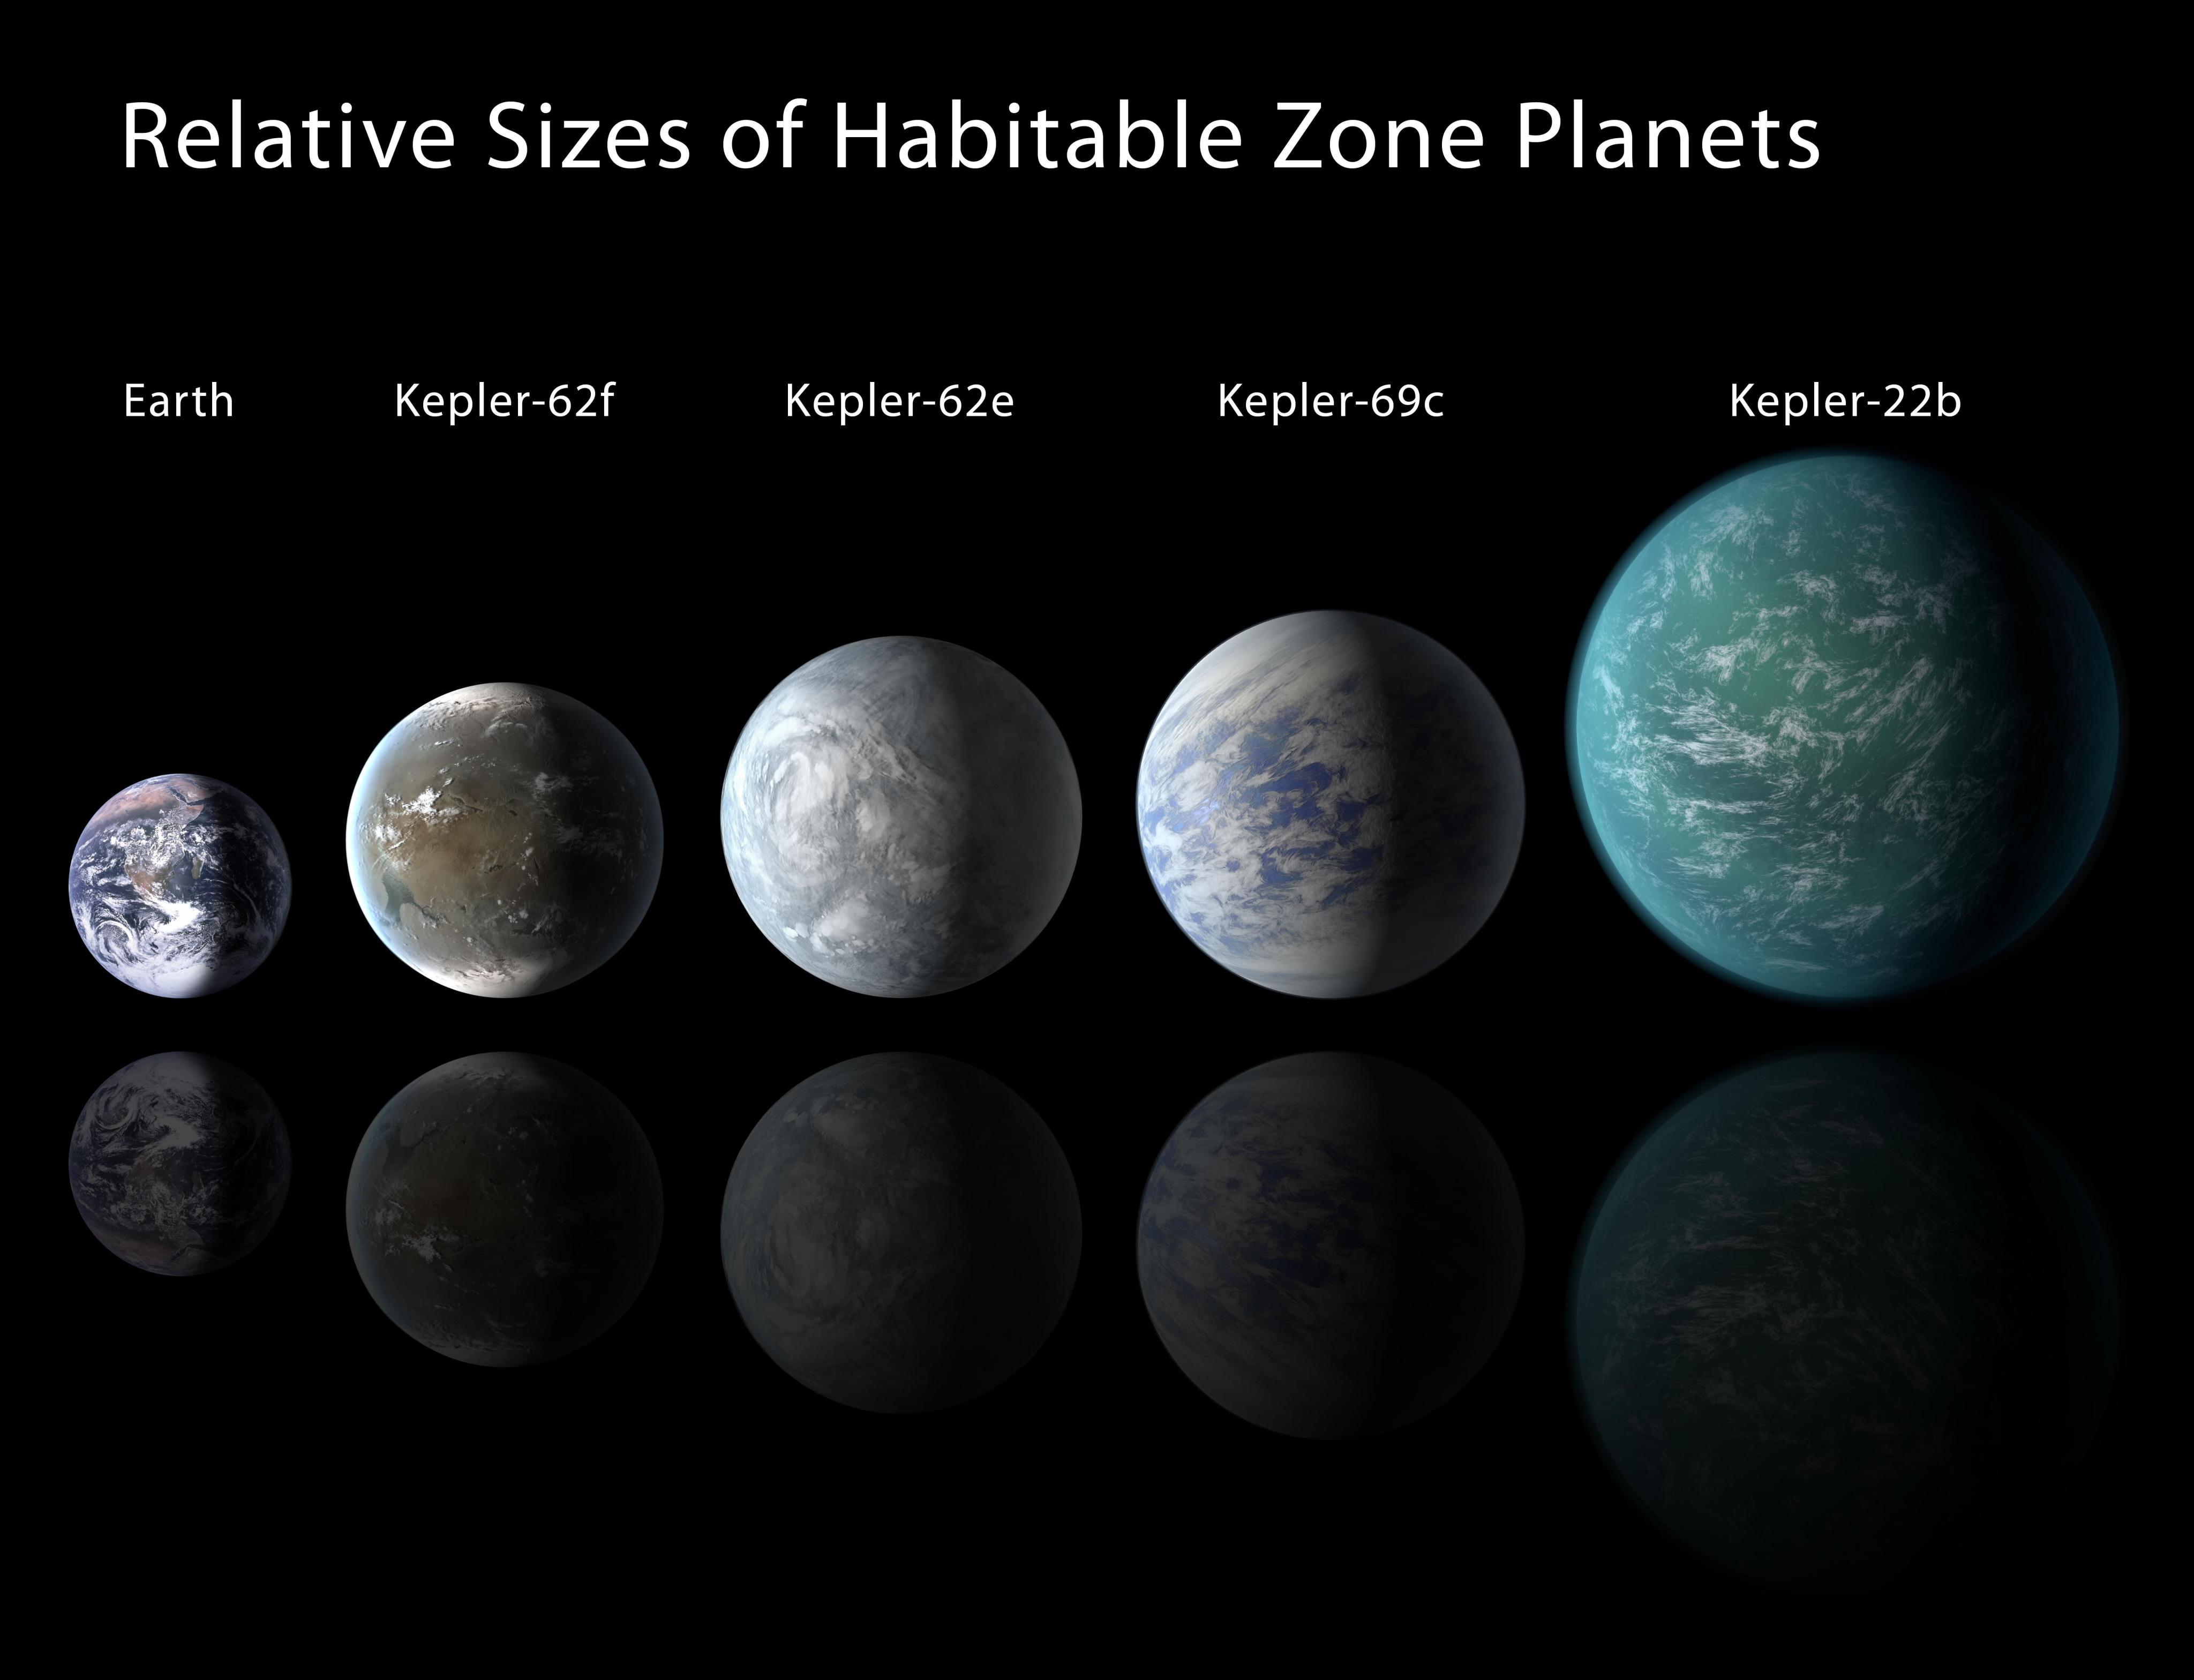 Lining Kepler Habitable Zone Planets Up